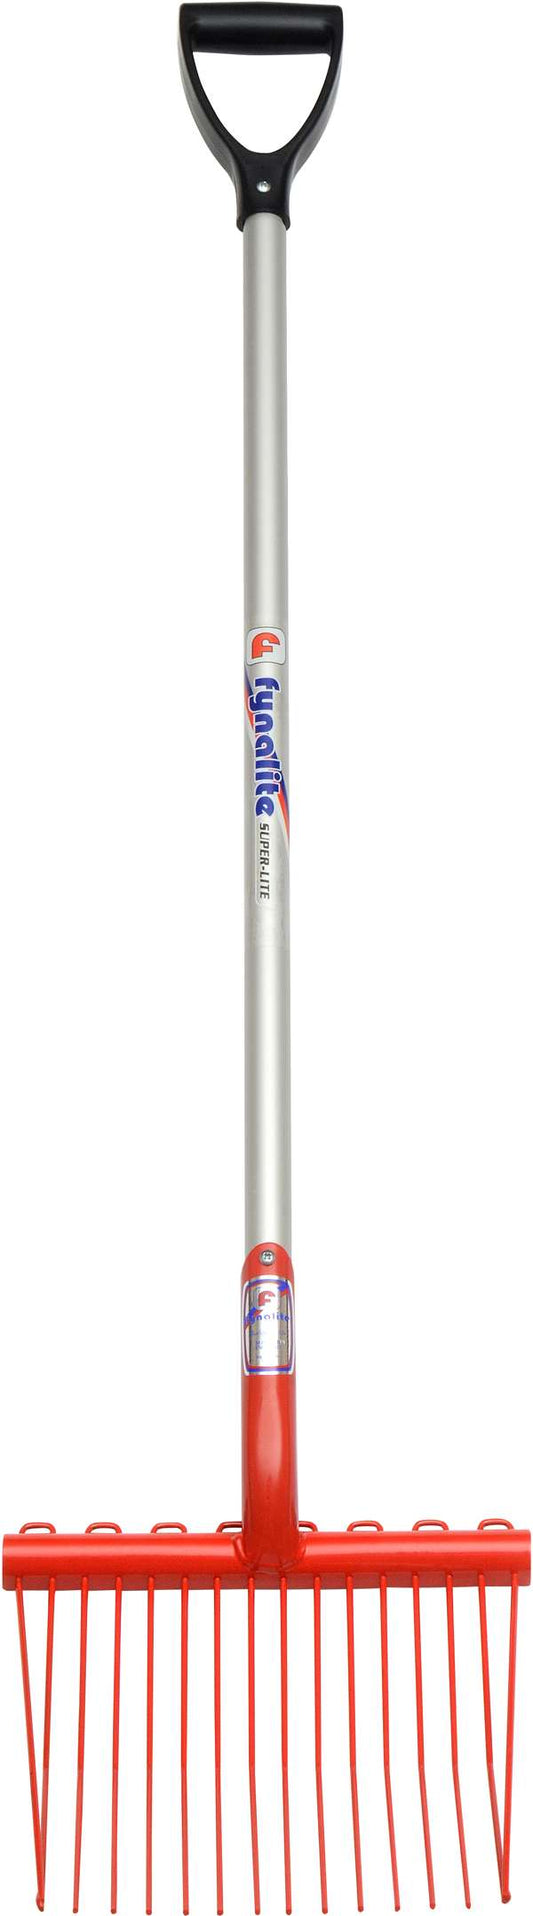 Fyna-Lite Super Lite Stable Fork D-Grip Aluminium Handle